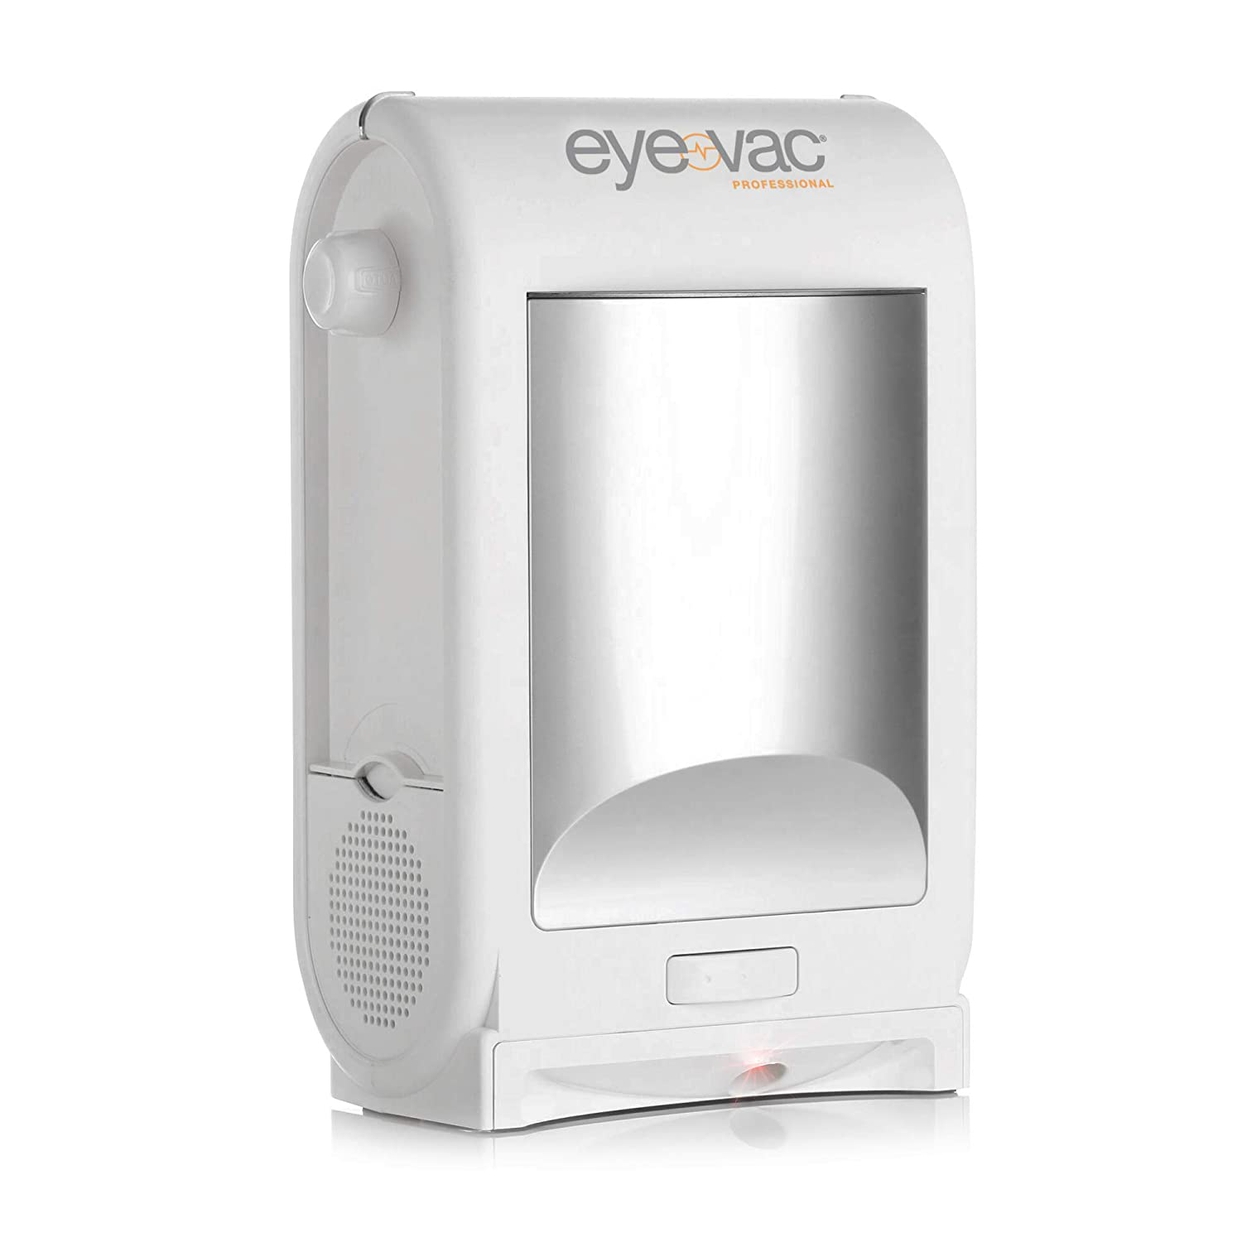 CrowleyJones(クローリージョーンズ) Eye-Vac Professional Vacuum Cleaner EVPRO-W